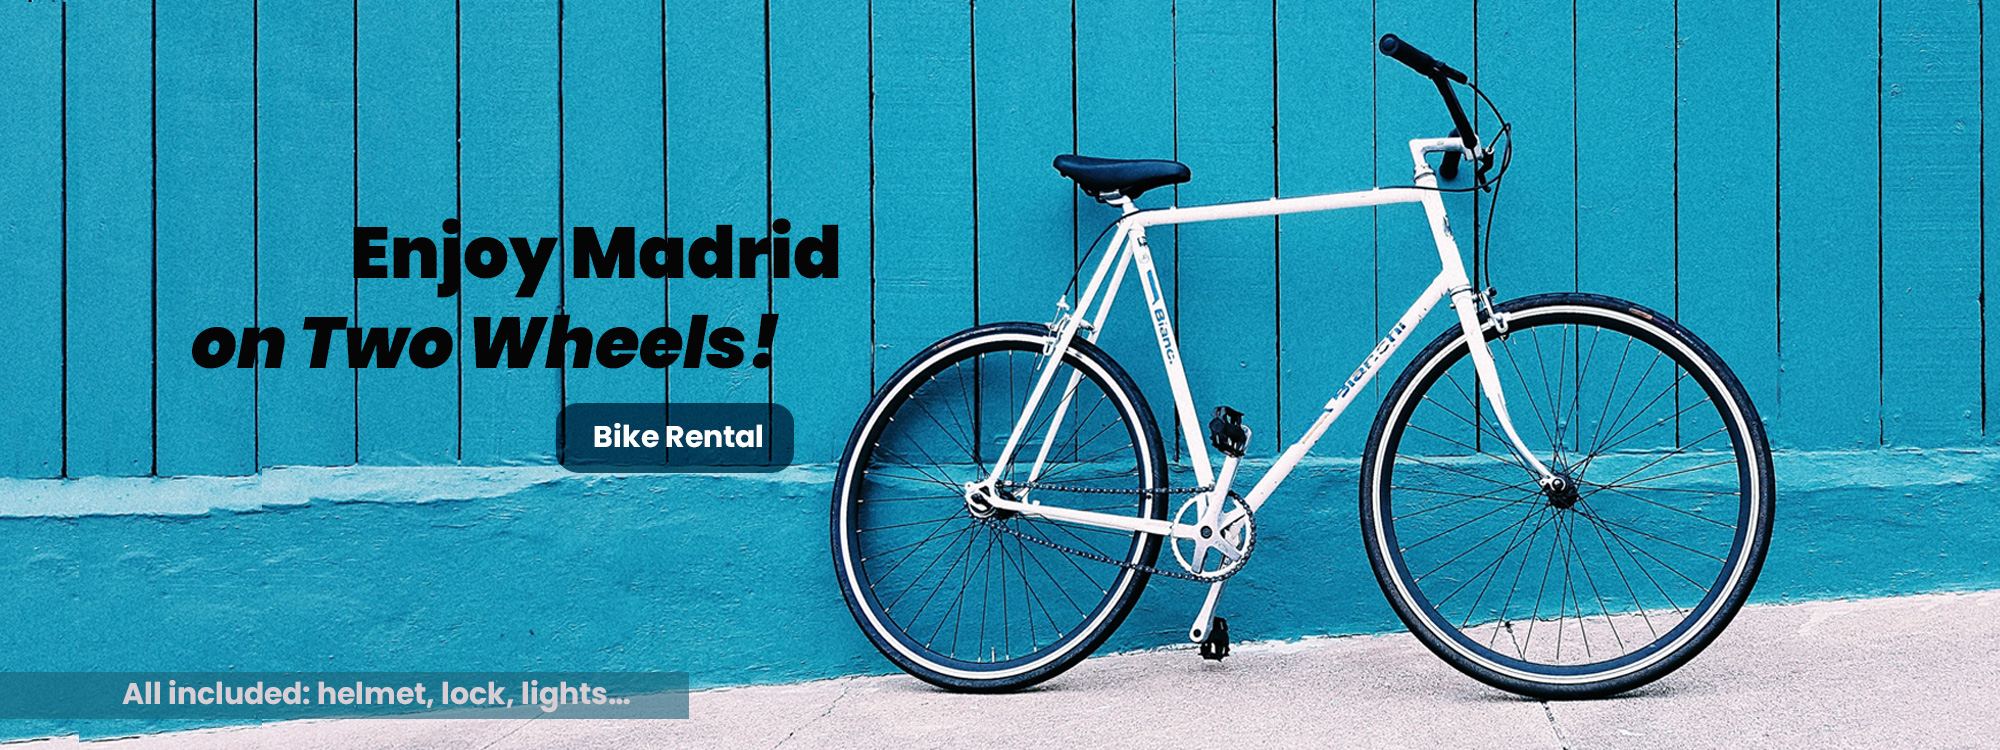 Bike Rental Madrid